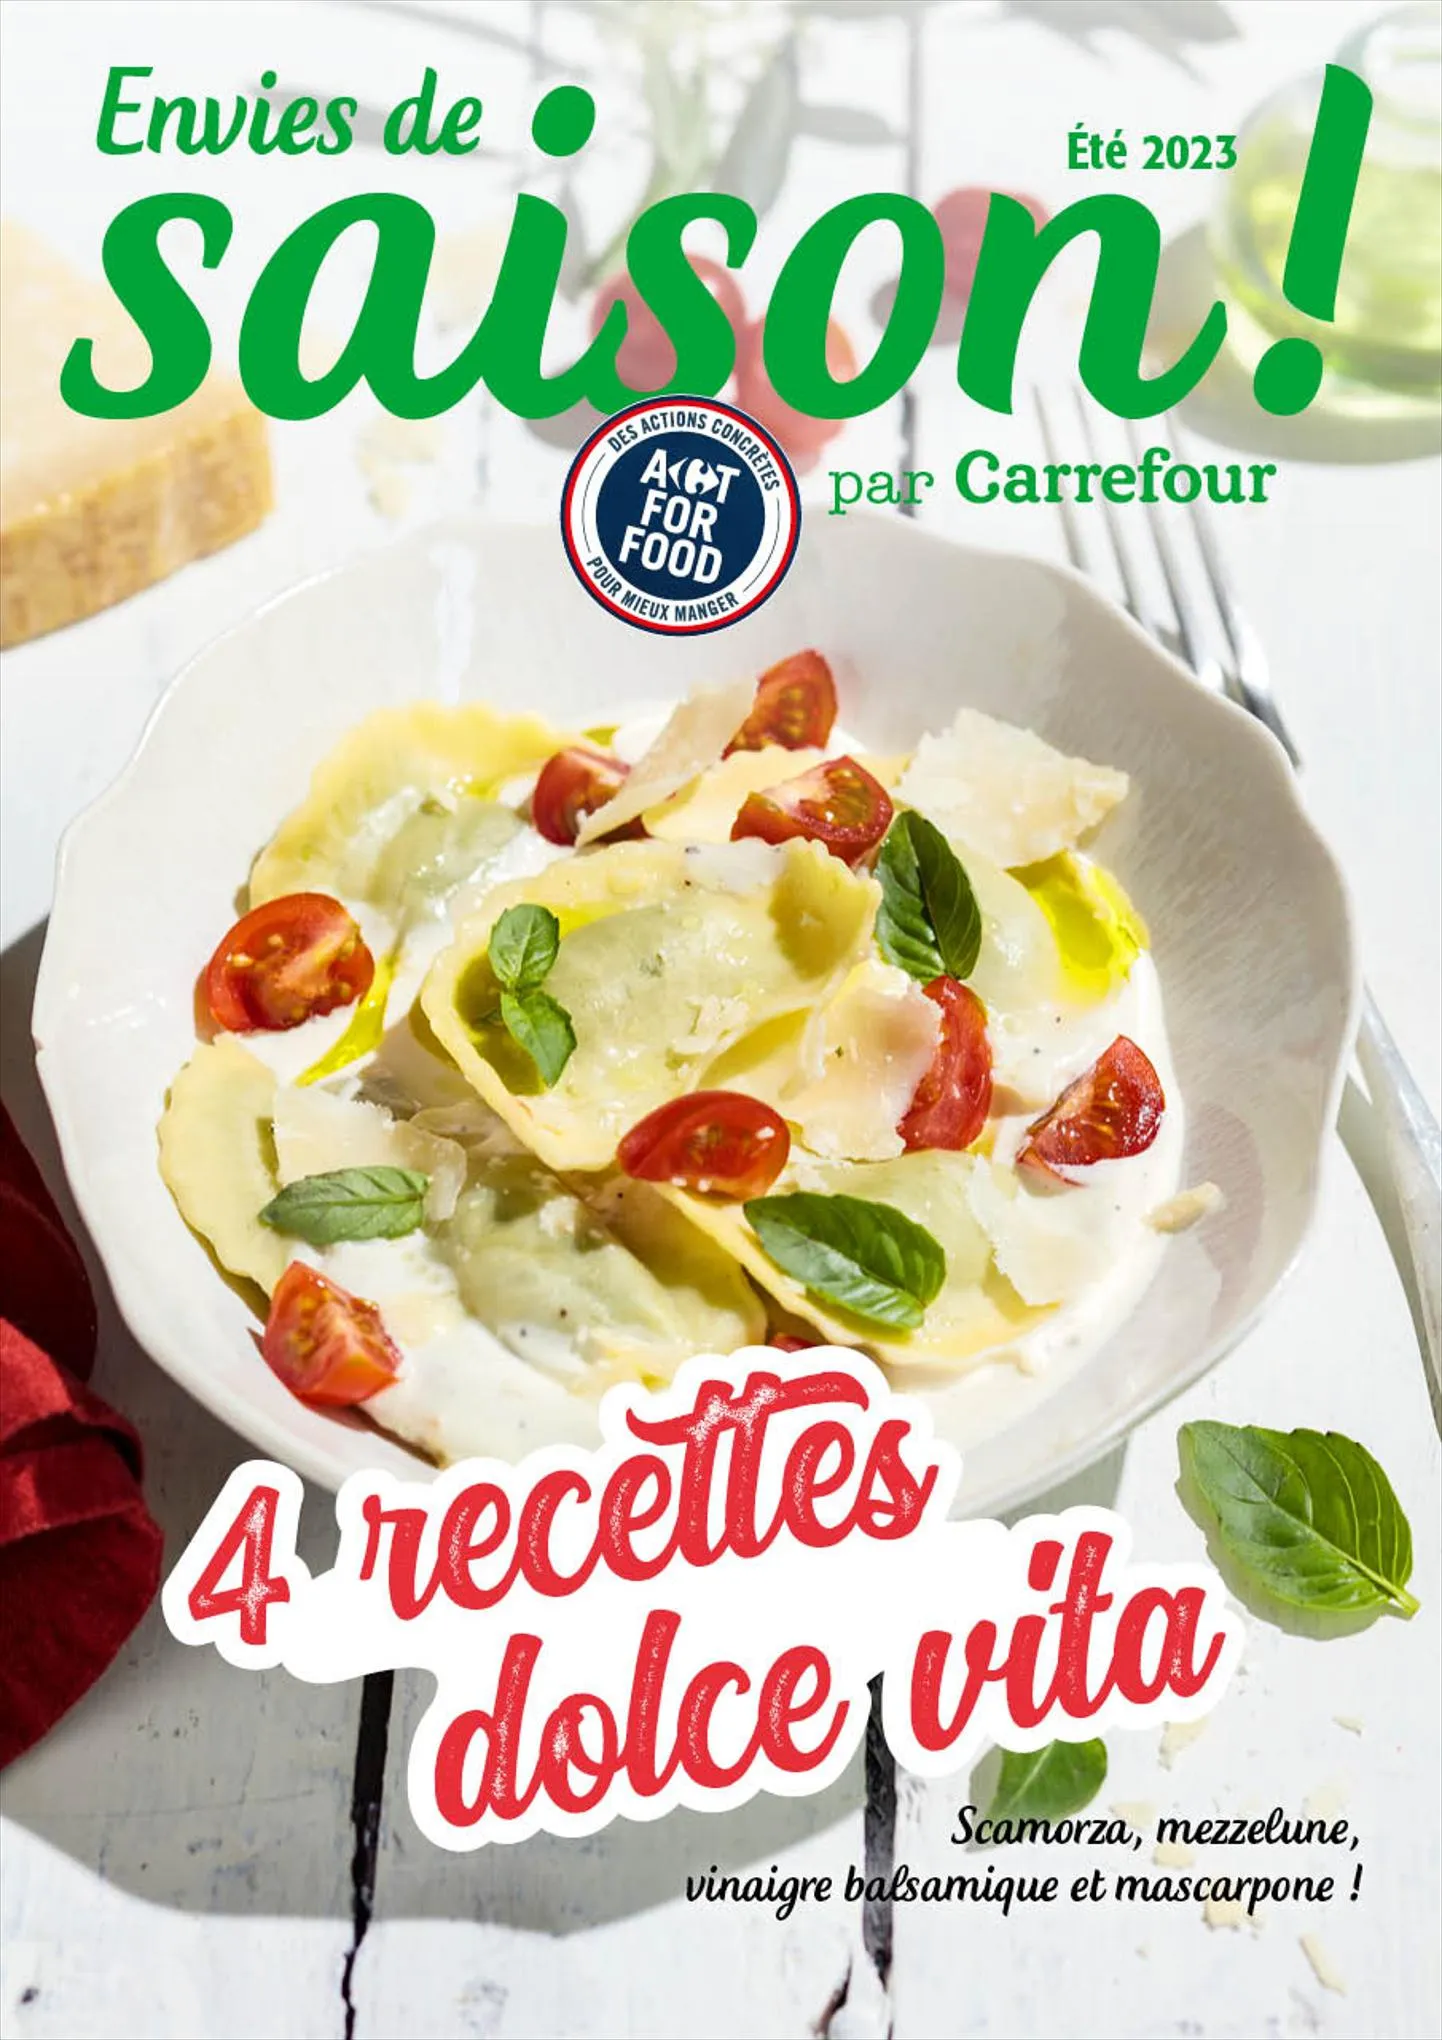 Catalogue 4 recettes dolce vita, page 00001